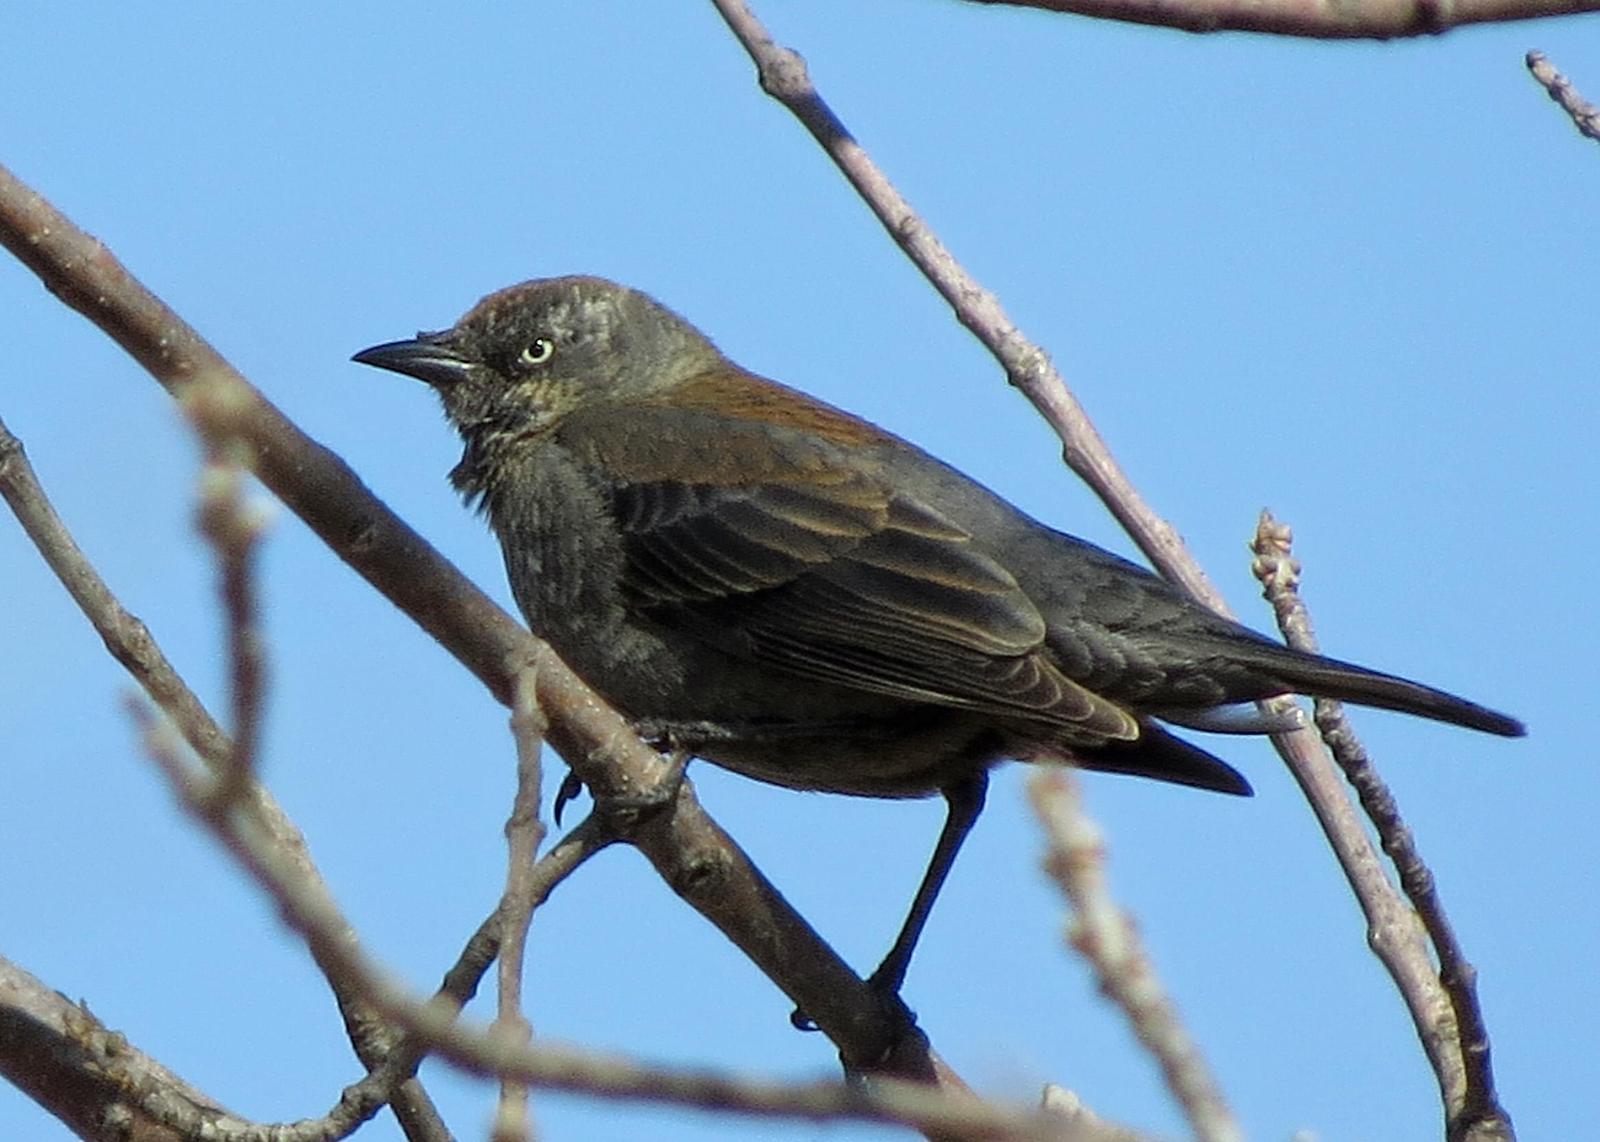 Rusty Blackbird Photo by Kelly Preheim